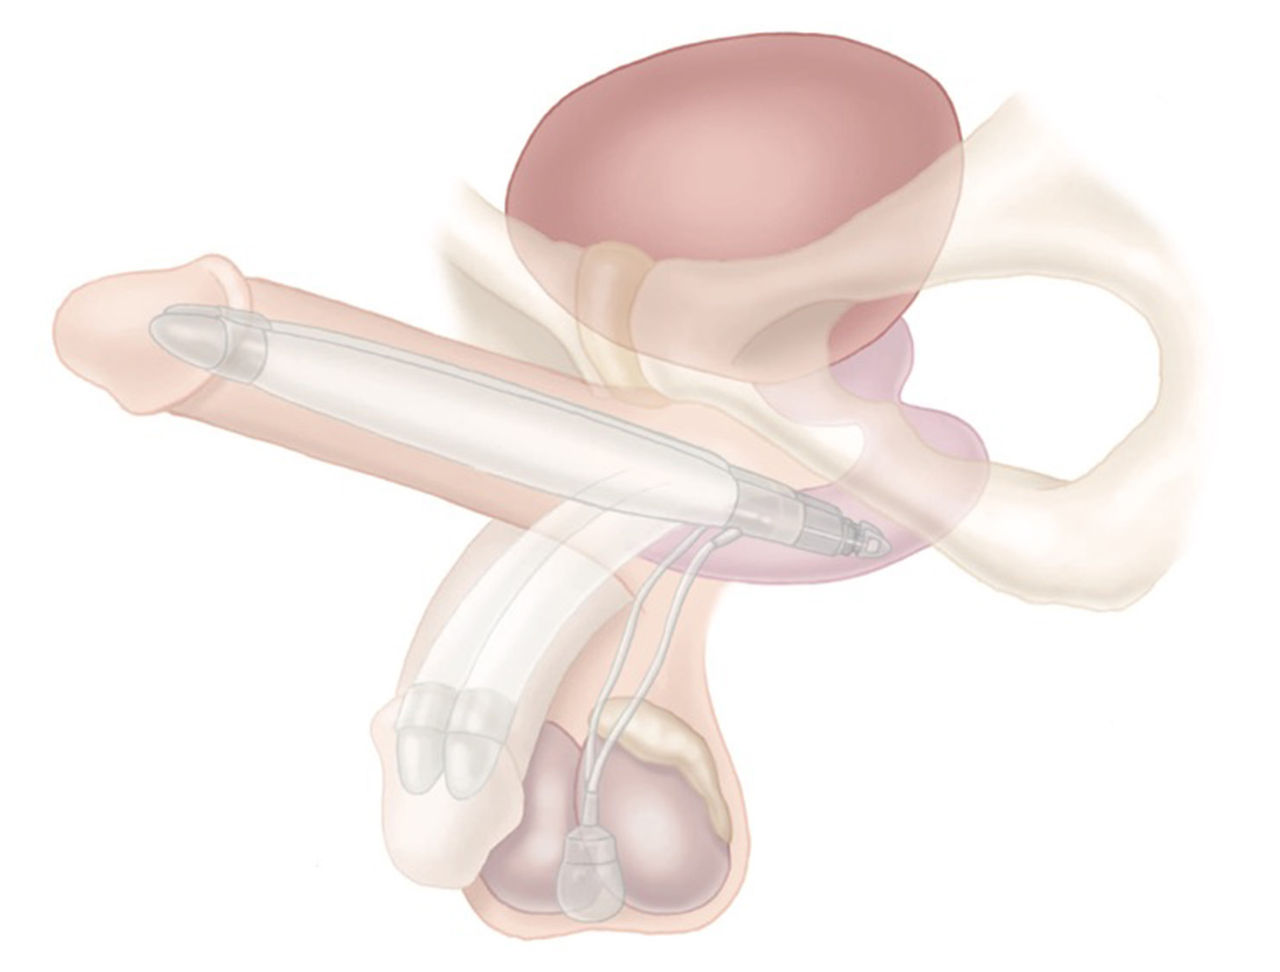 AMS Ambicor™ Penile Implant illustration.